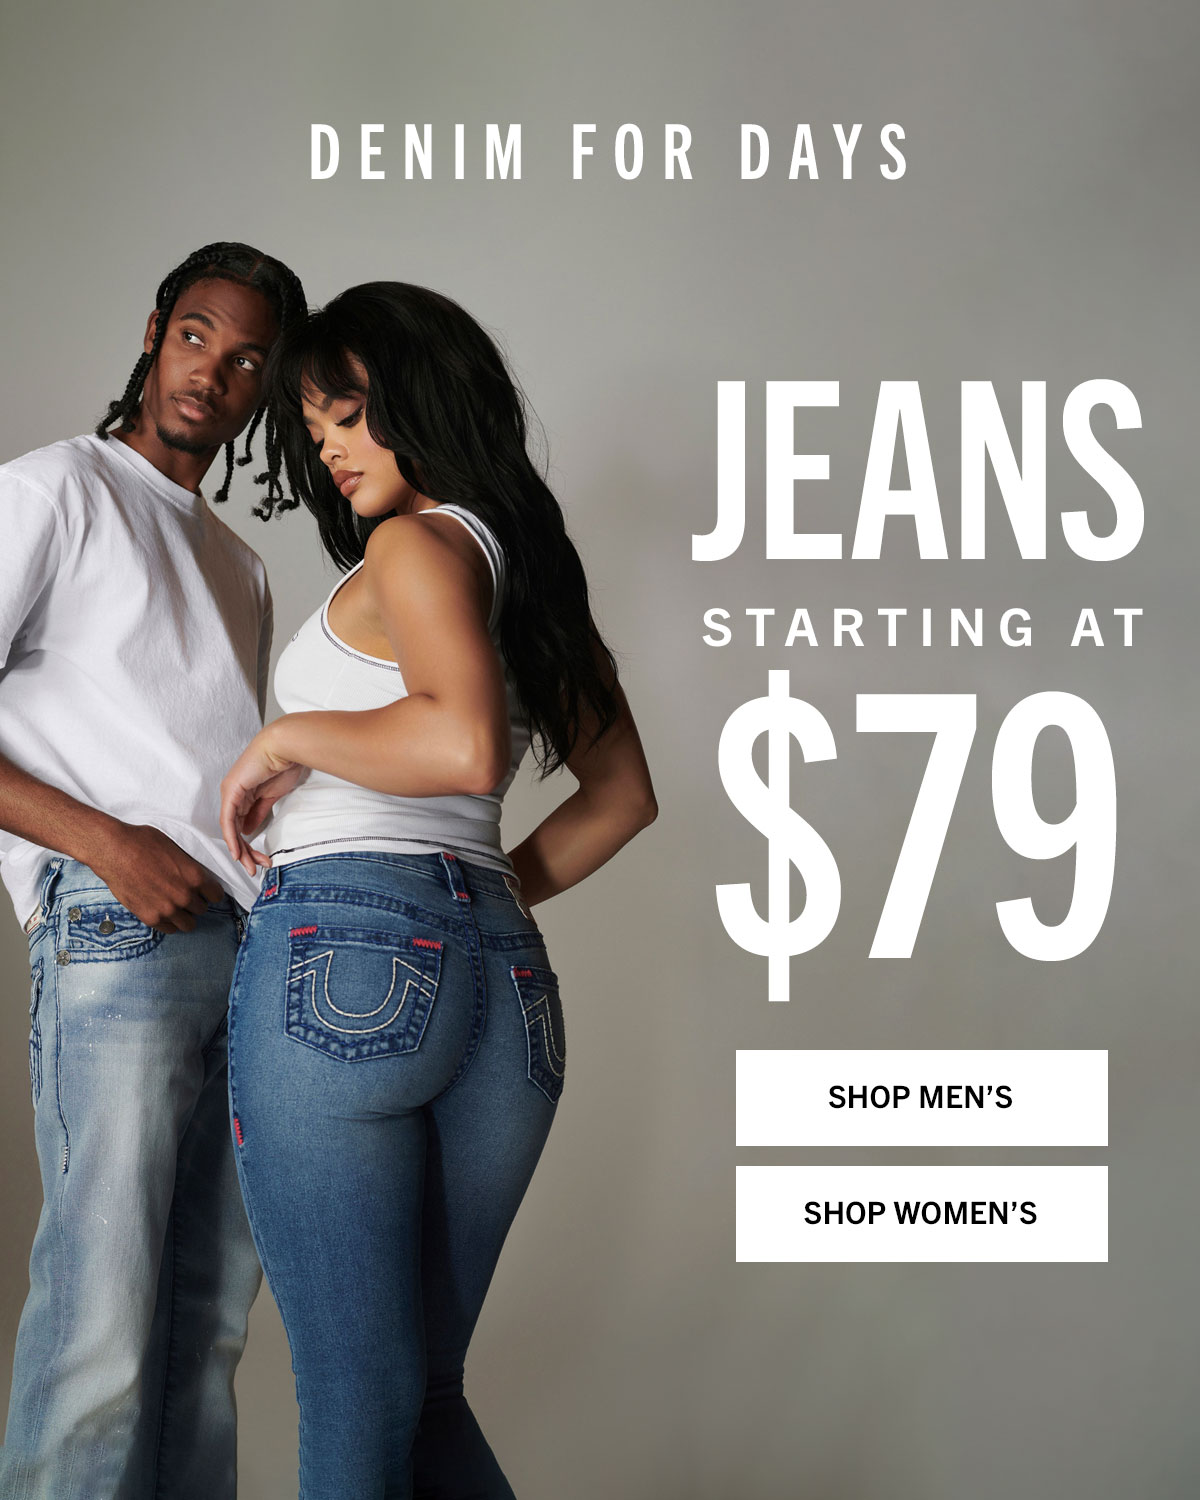 Denim for days. Jeans starting at $79.